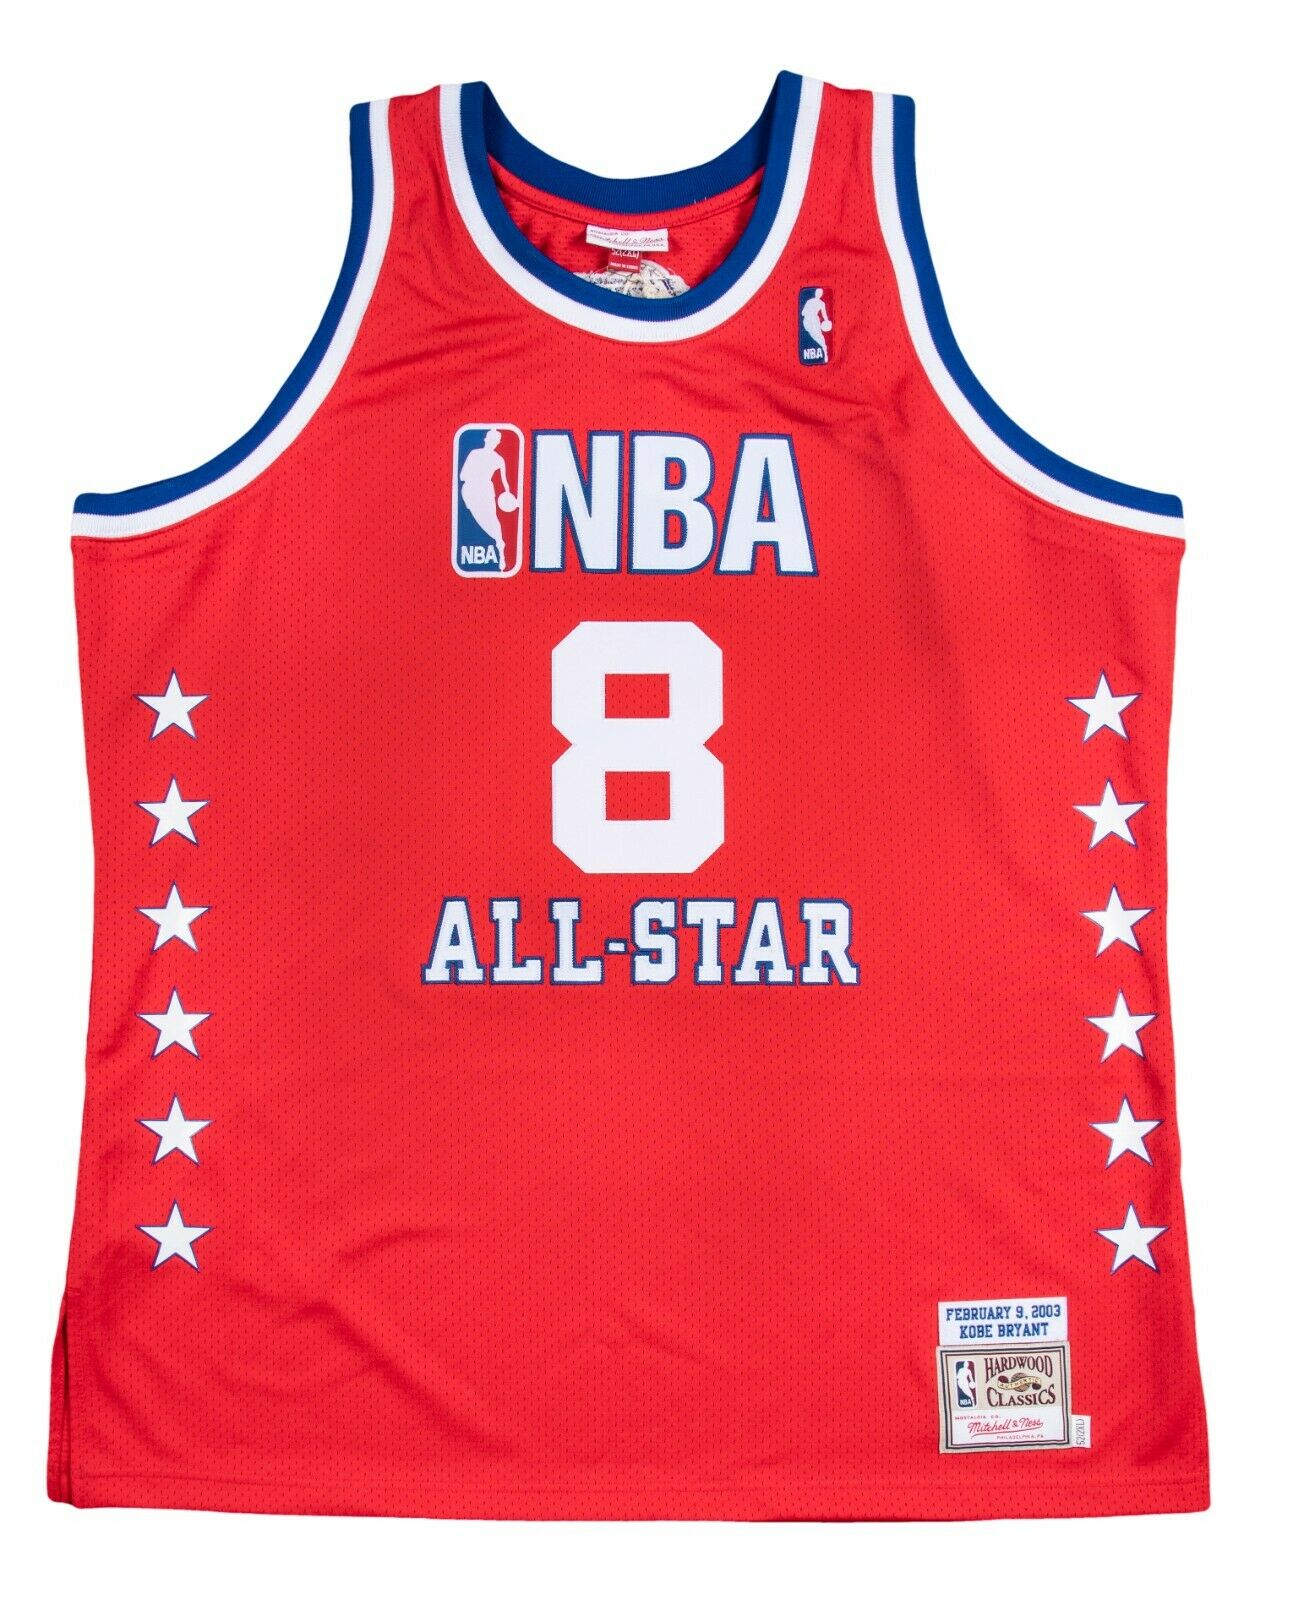 2003 NBA All-Star Game (2003)